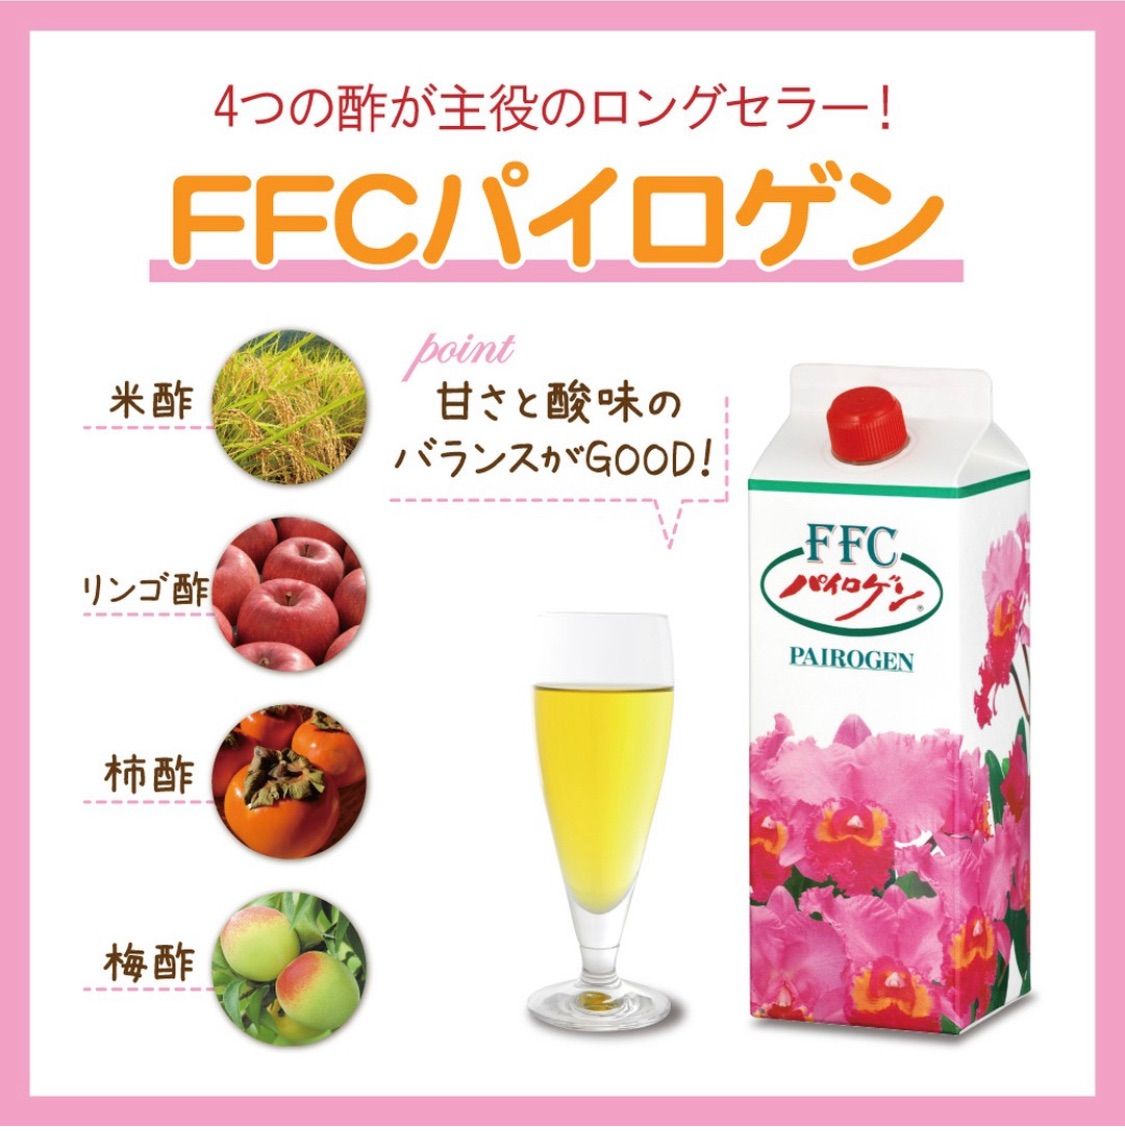 FC 赤塚 パイロゲン 12本セット - 飲料